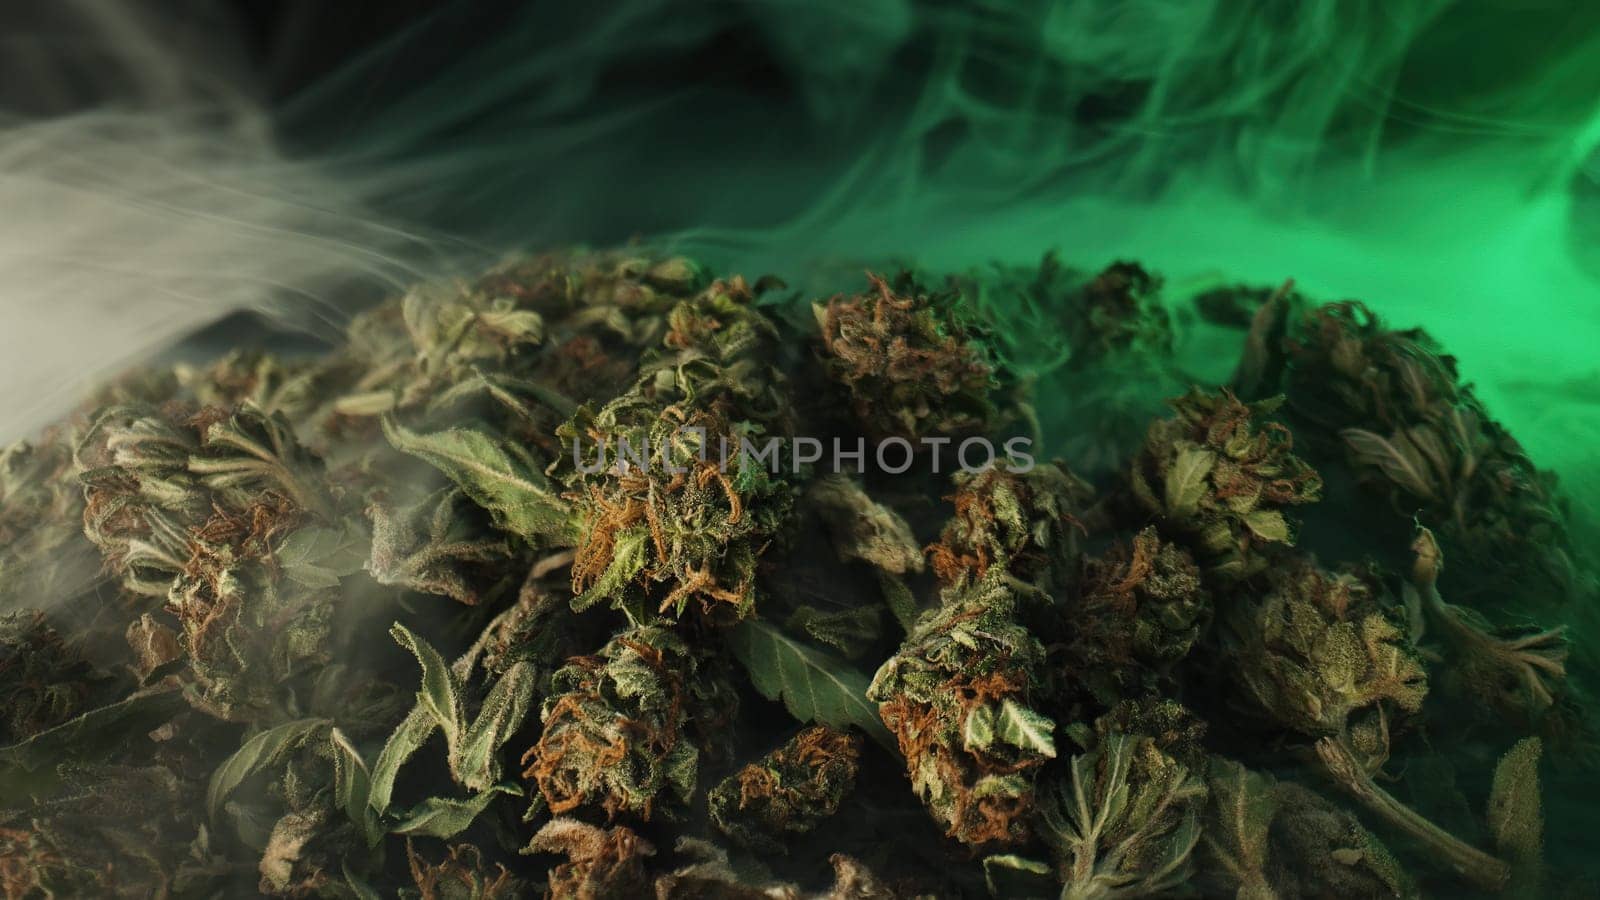 Marijuana buds in macro. Legal medical cannabis, smoking weed activities, recreational drug. Harvest, beautiful hemp, making ganja